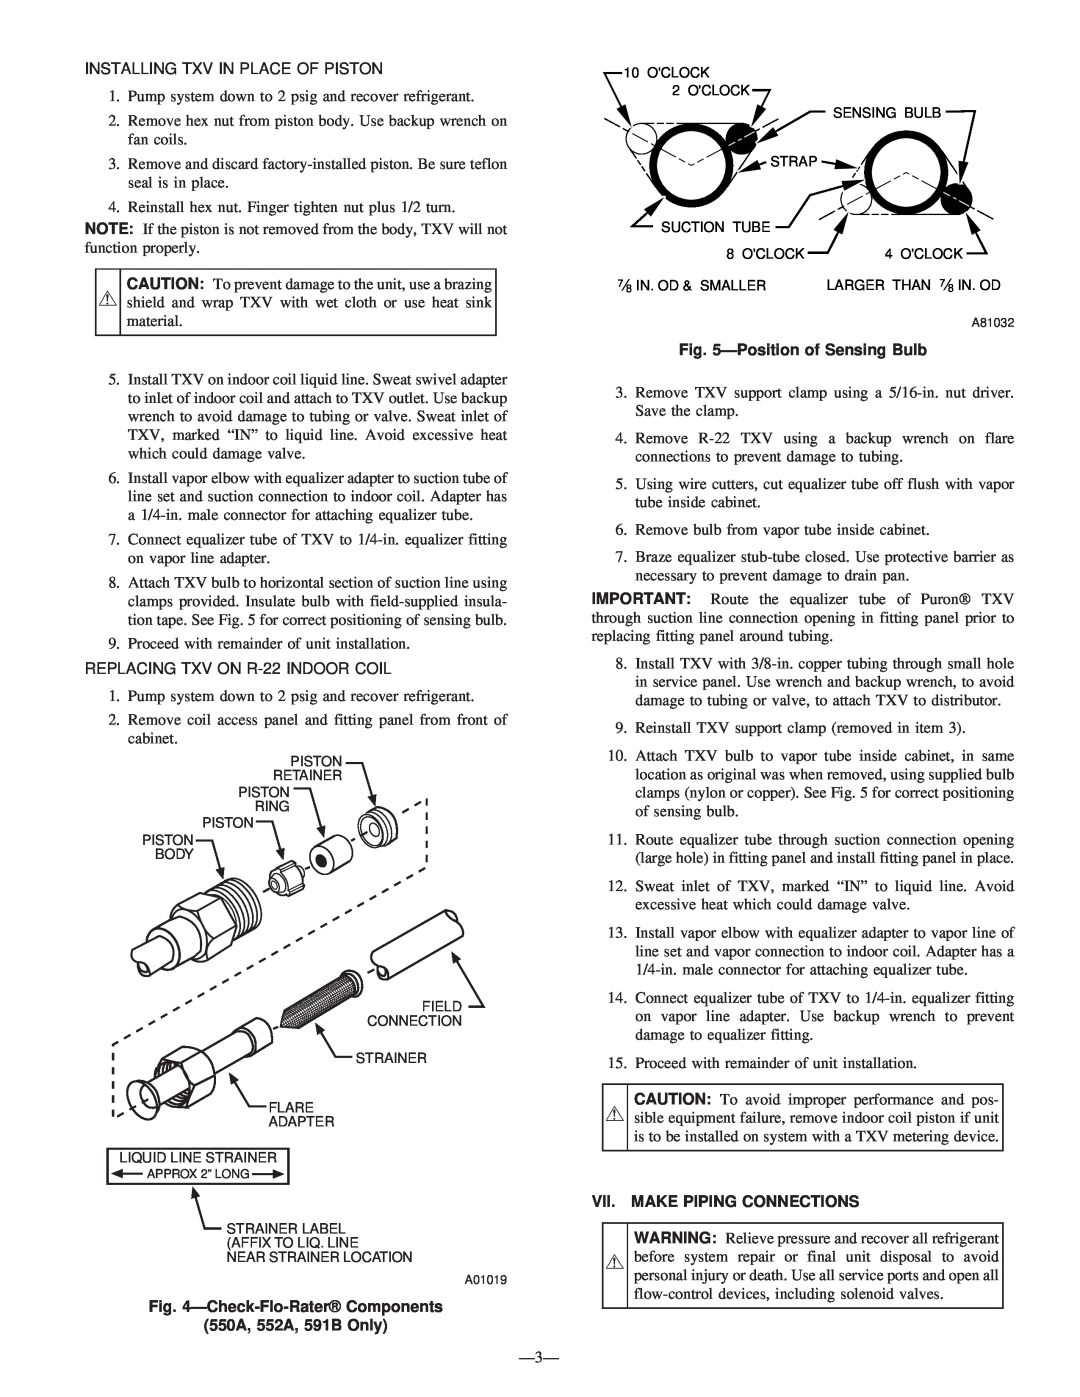 Bryant 591B instruction manual Installing Txv In Place Of Piston, REPLACING TXV ON R-22INDOOR COIL, Positionof Sensing Bulb 